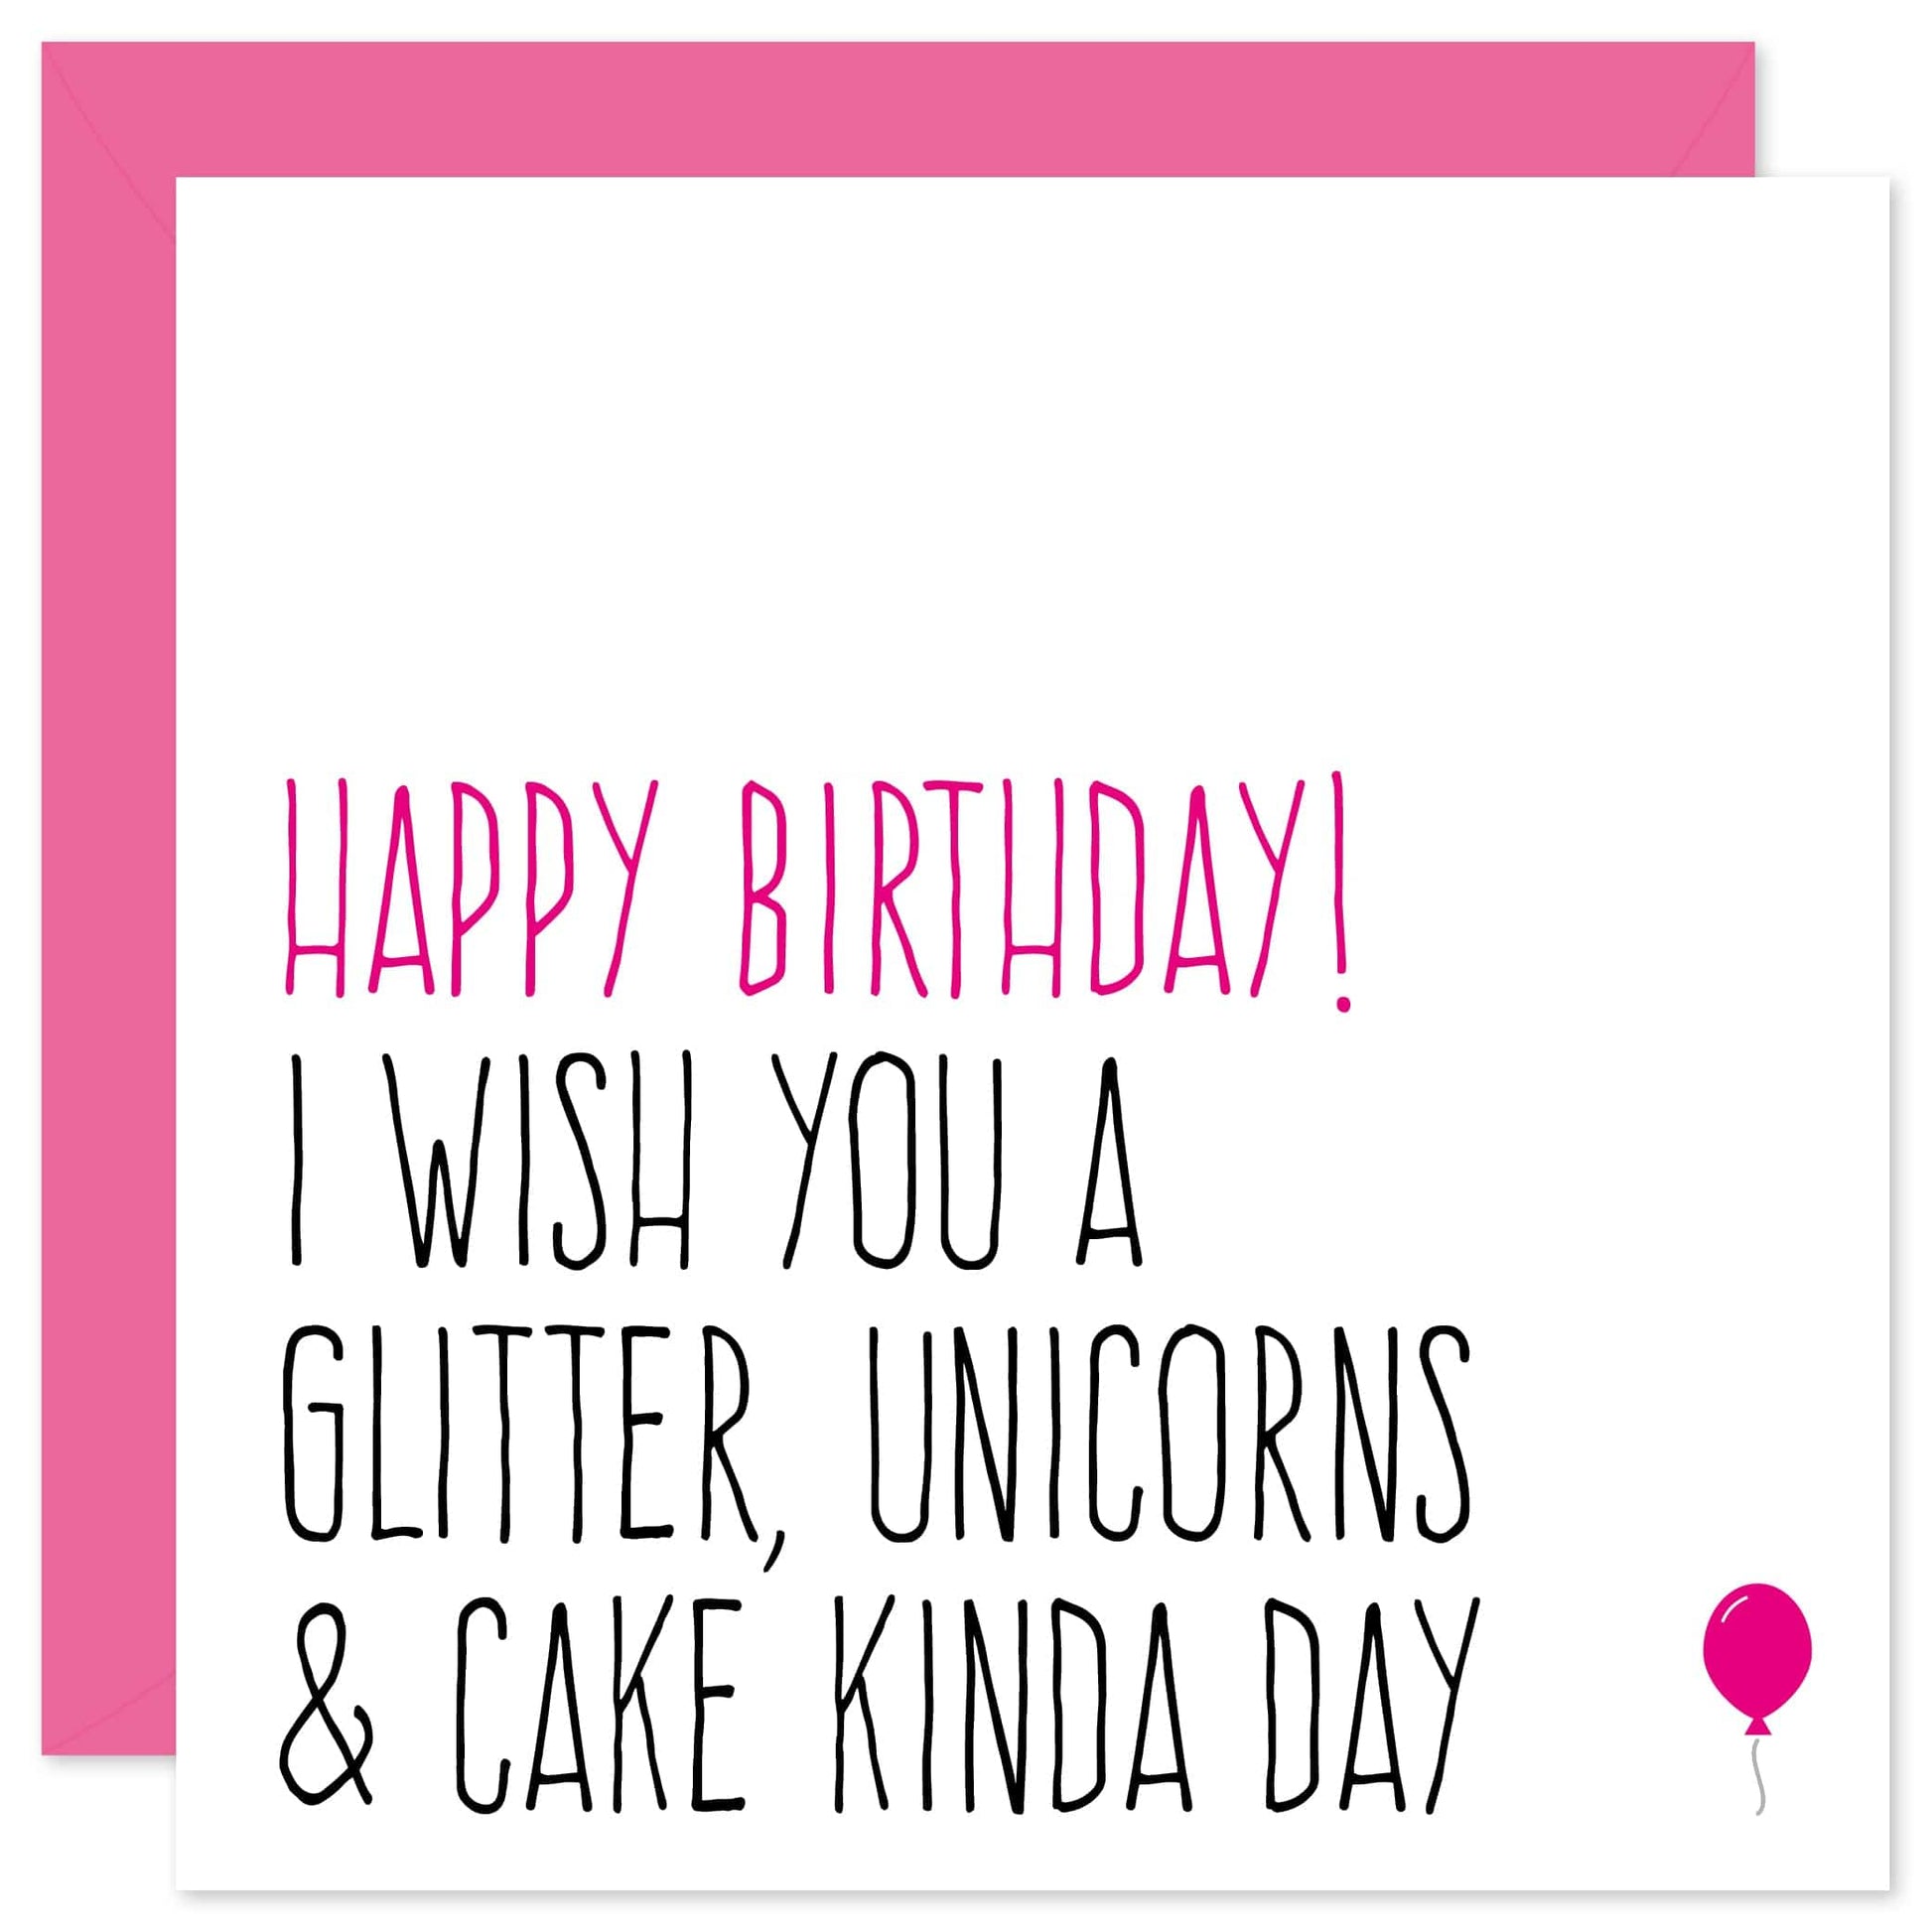 Glitter unicorns and cake birthday card from Purple Tree Designs